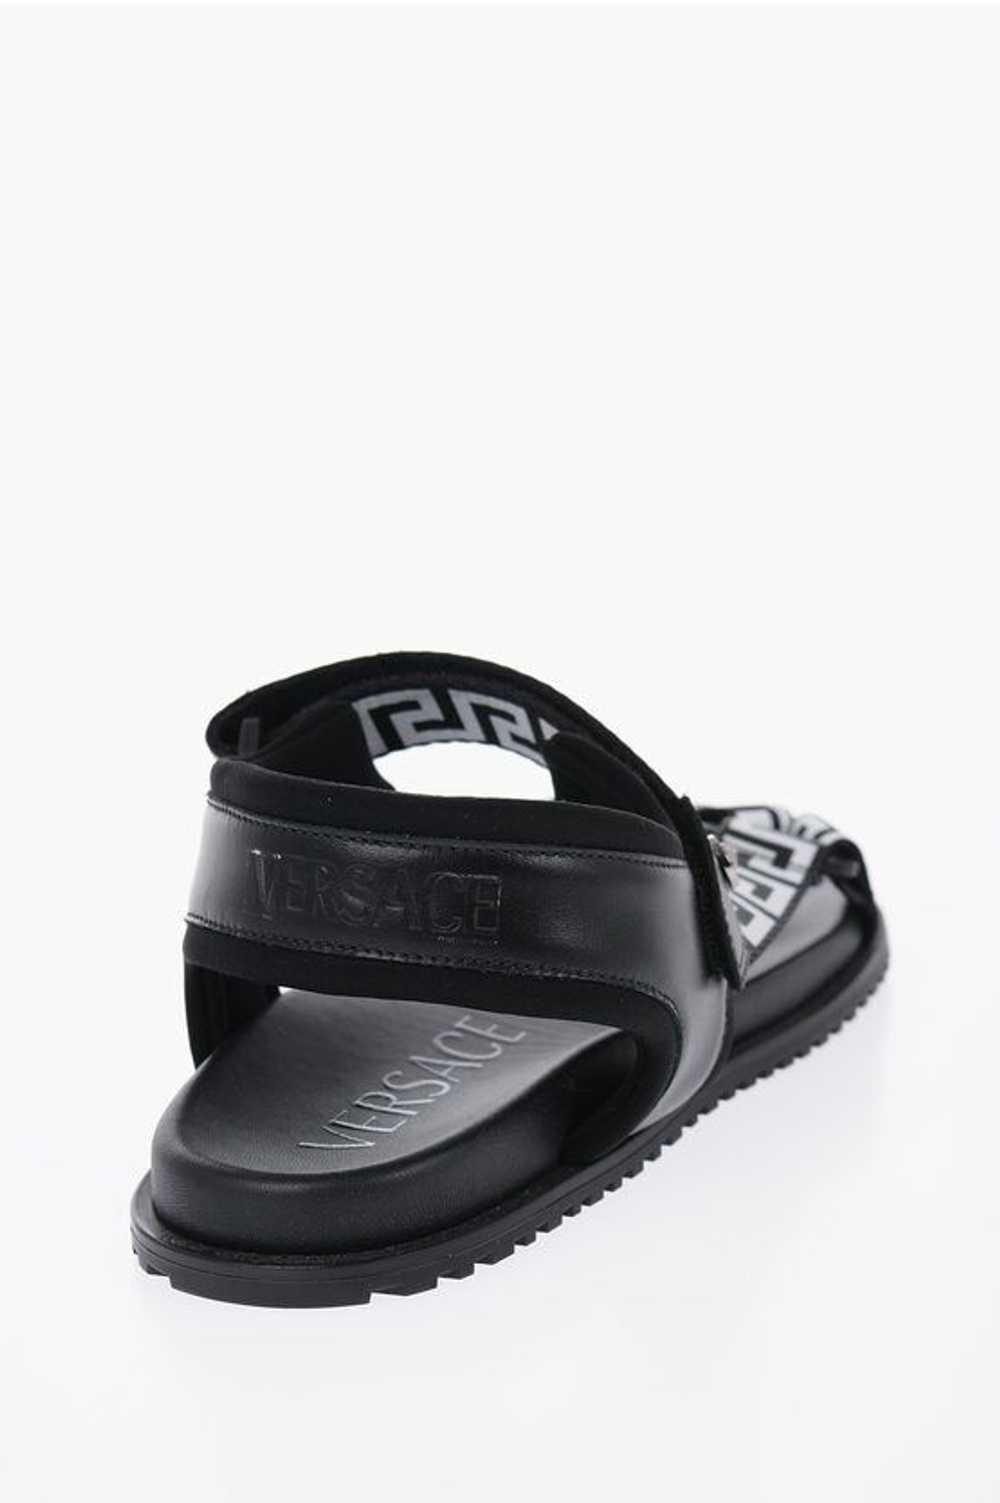 Versace og1mm0524 Fabric Print Sandals in Black - image 3